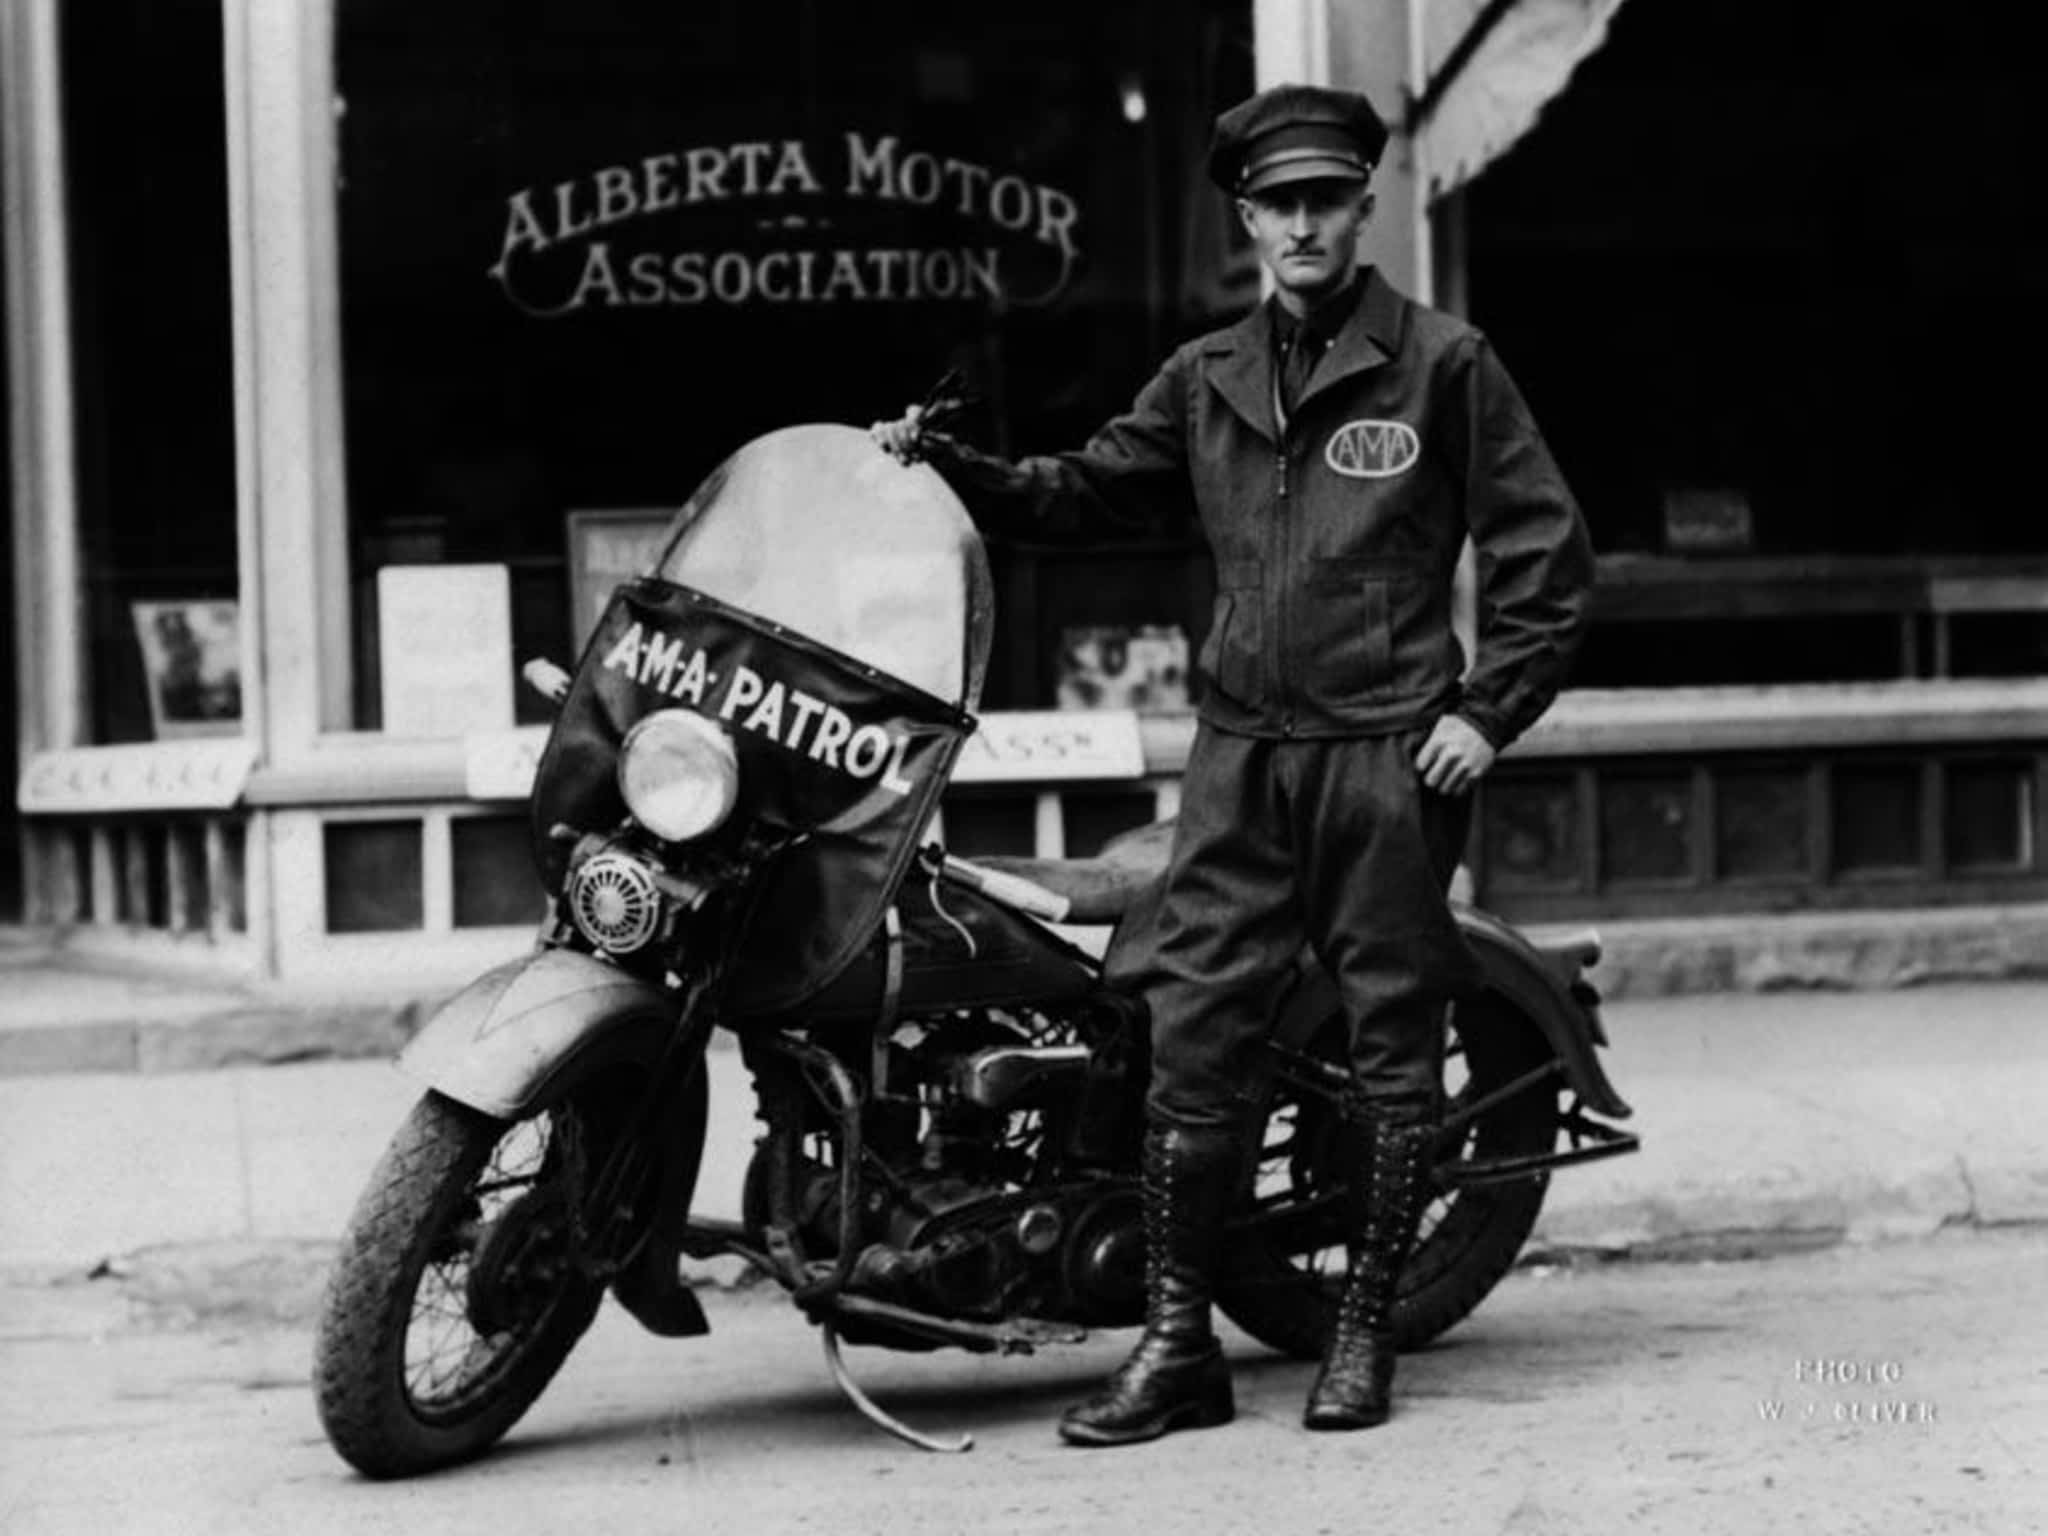 photo AMA - Alberta Motor Association